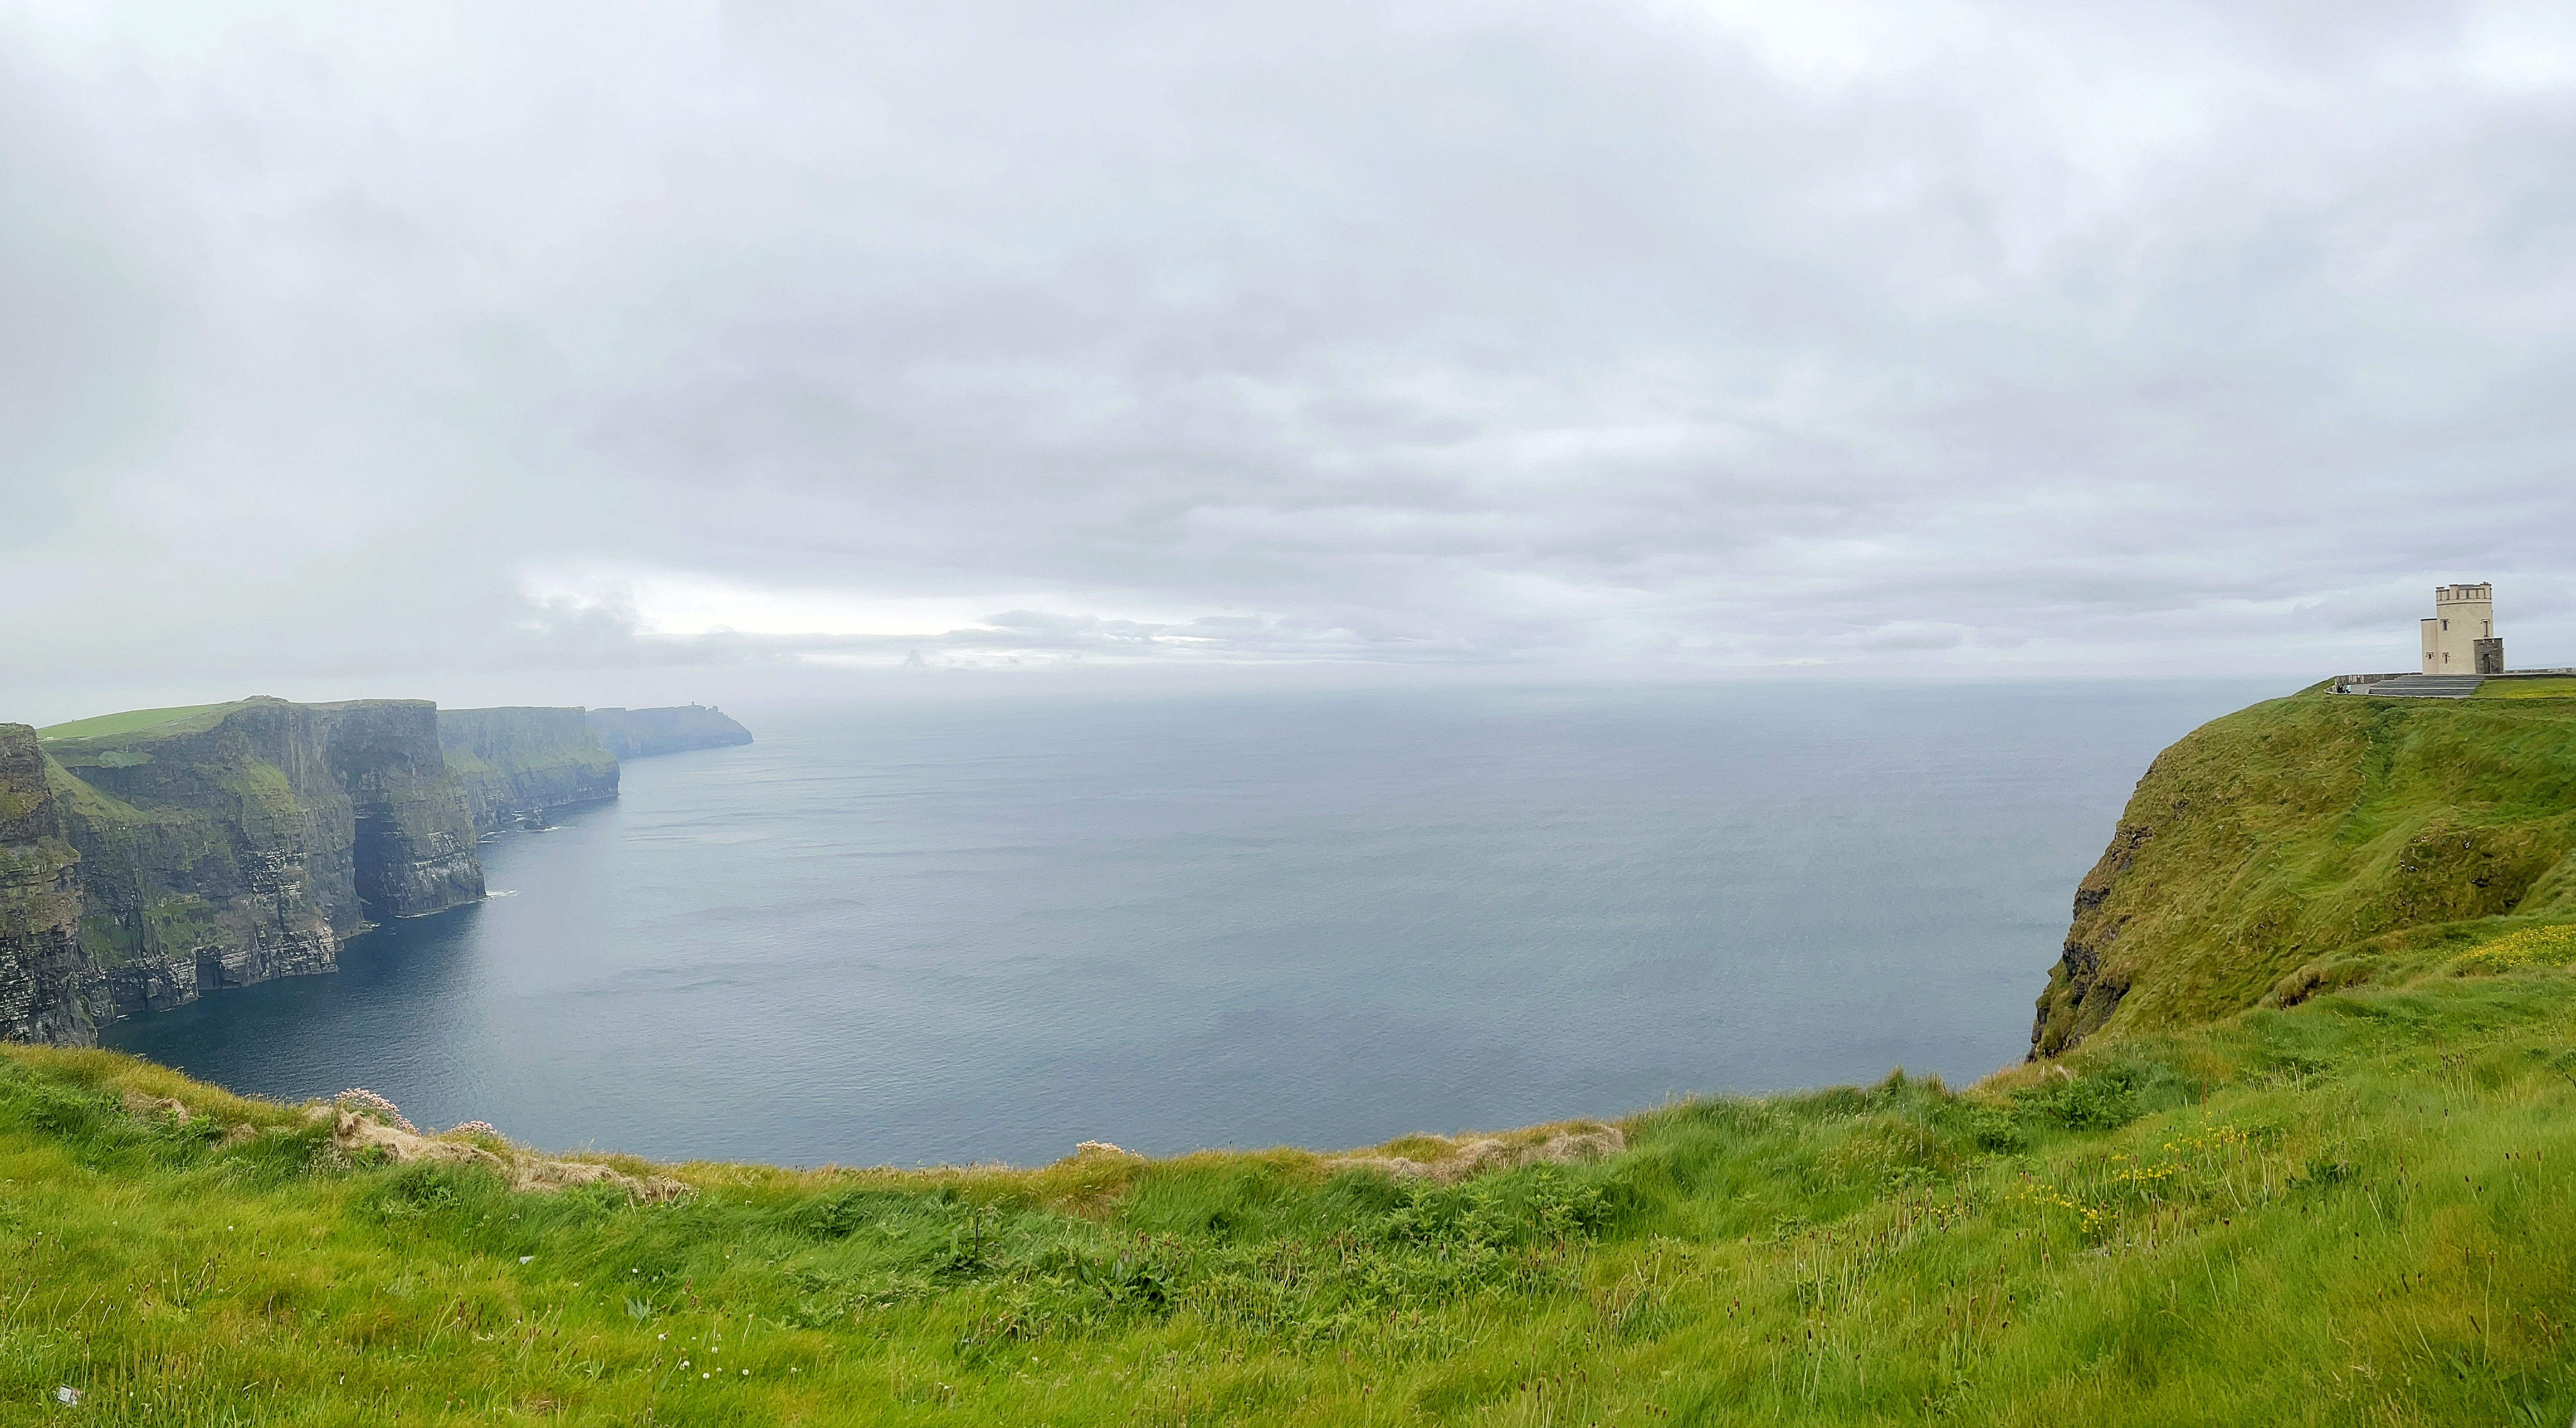 cliffs of Moher, Ireland